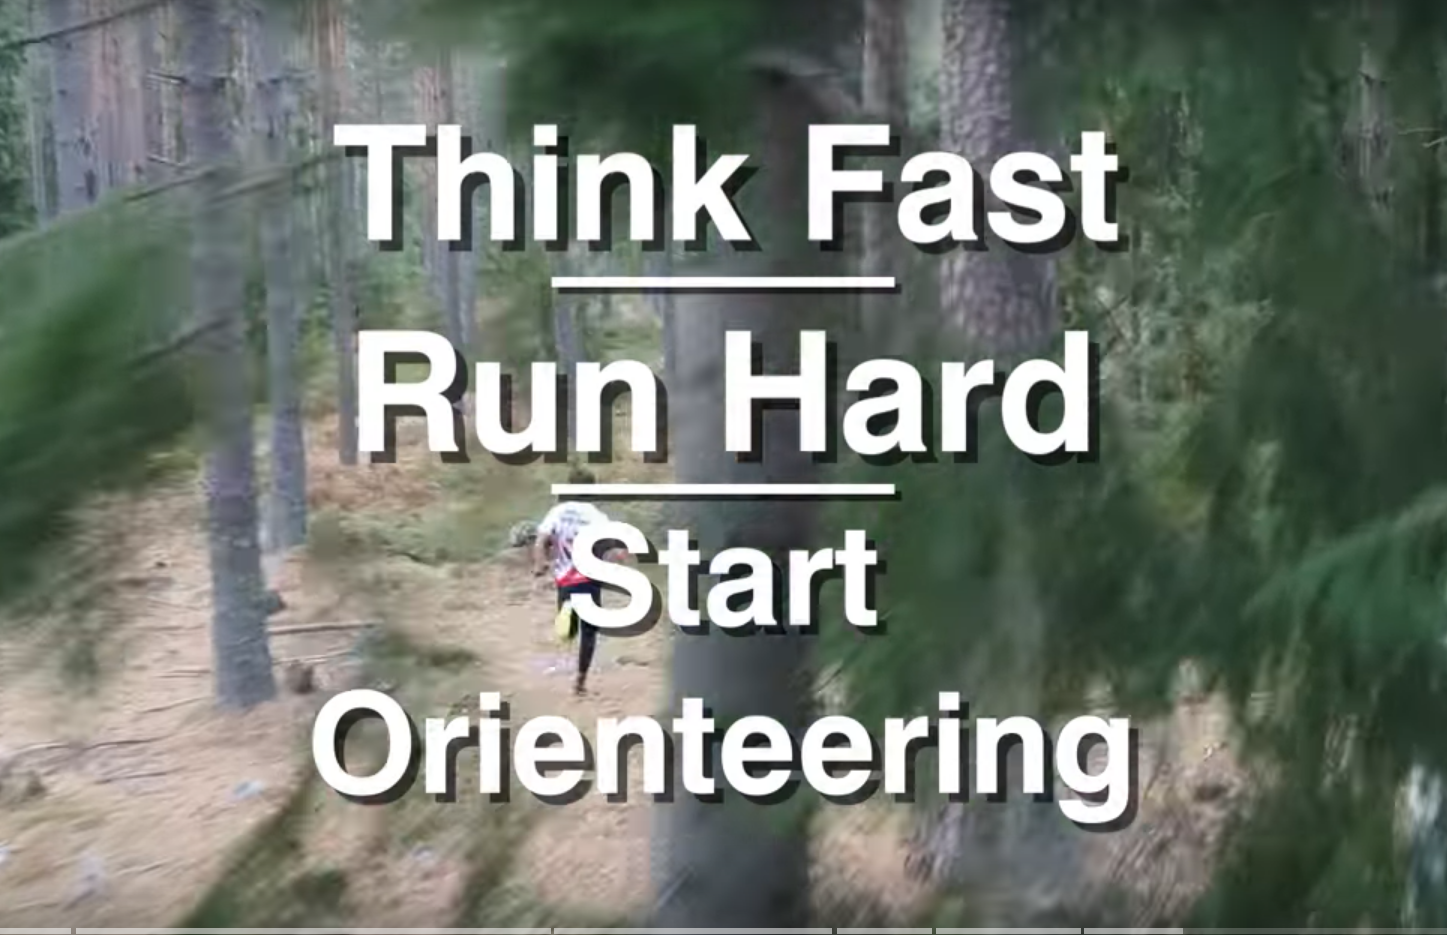 Start orienteering